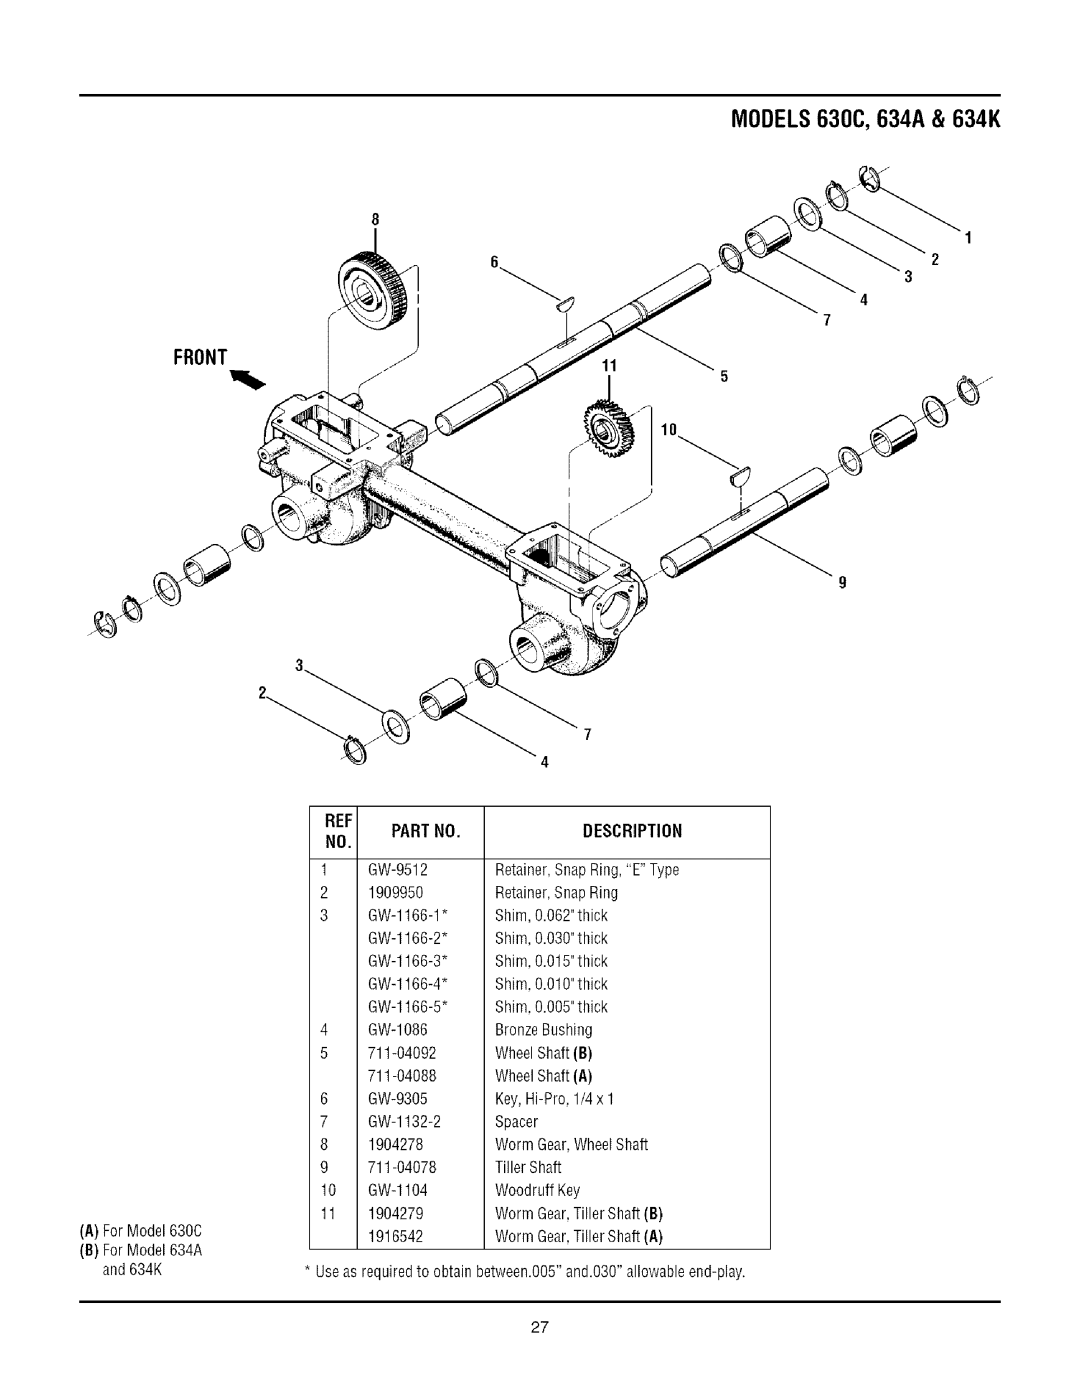 Troy-Bilt manual Front, MODELS630C, 634A & 634K, Partno, Description 